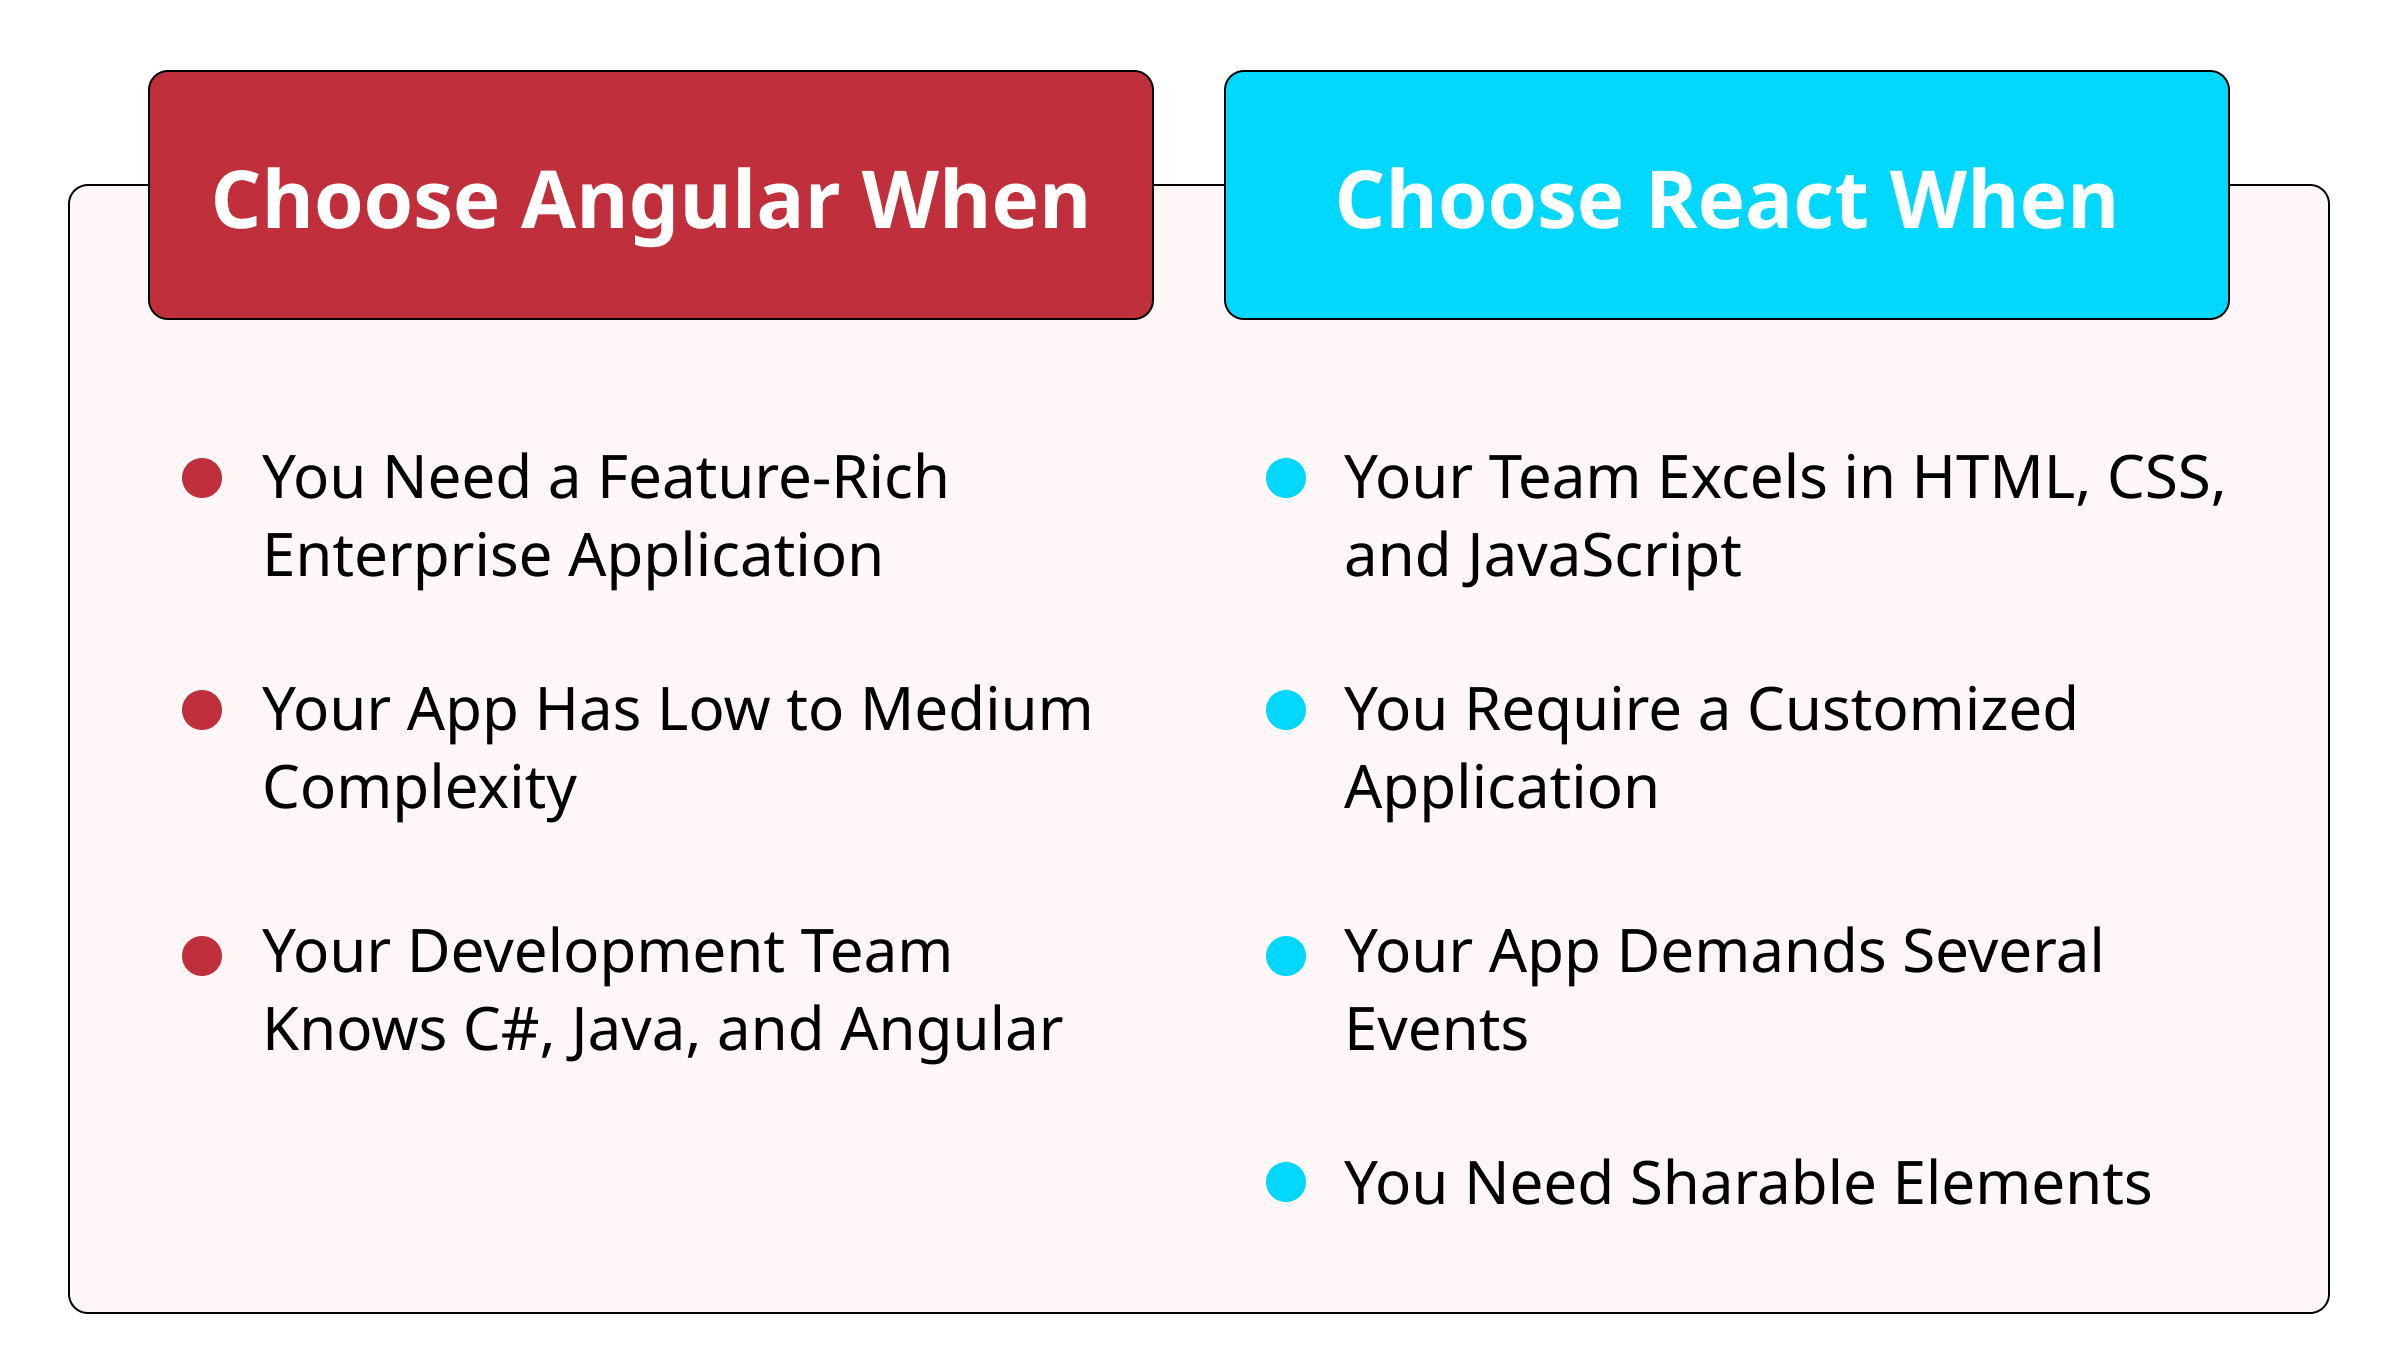 React vs. Angular When to Choose What